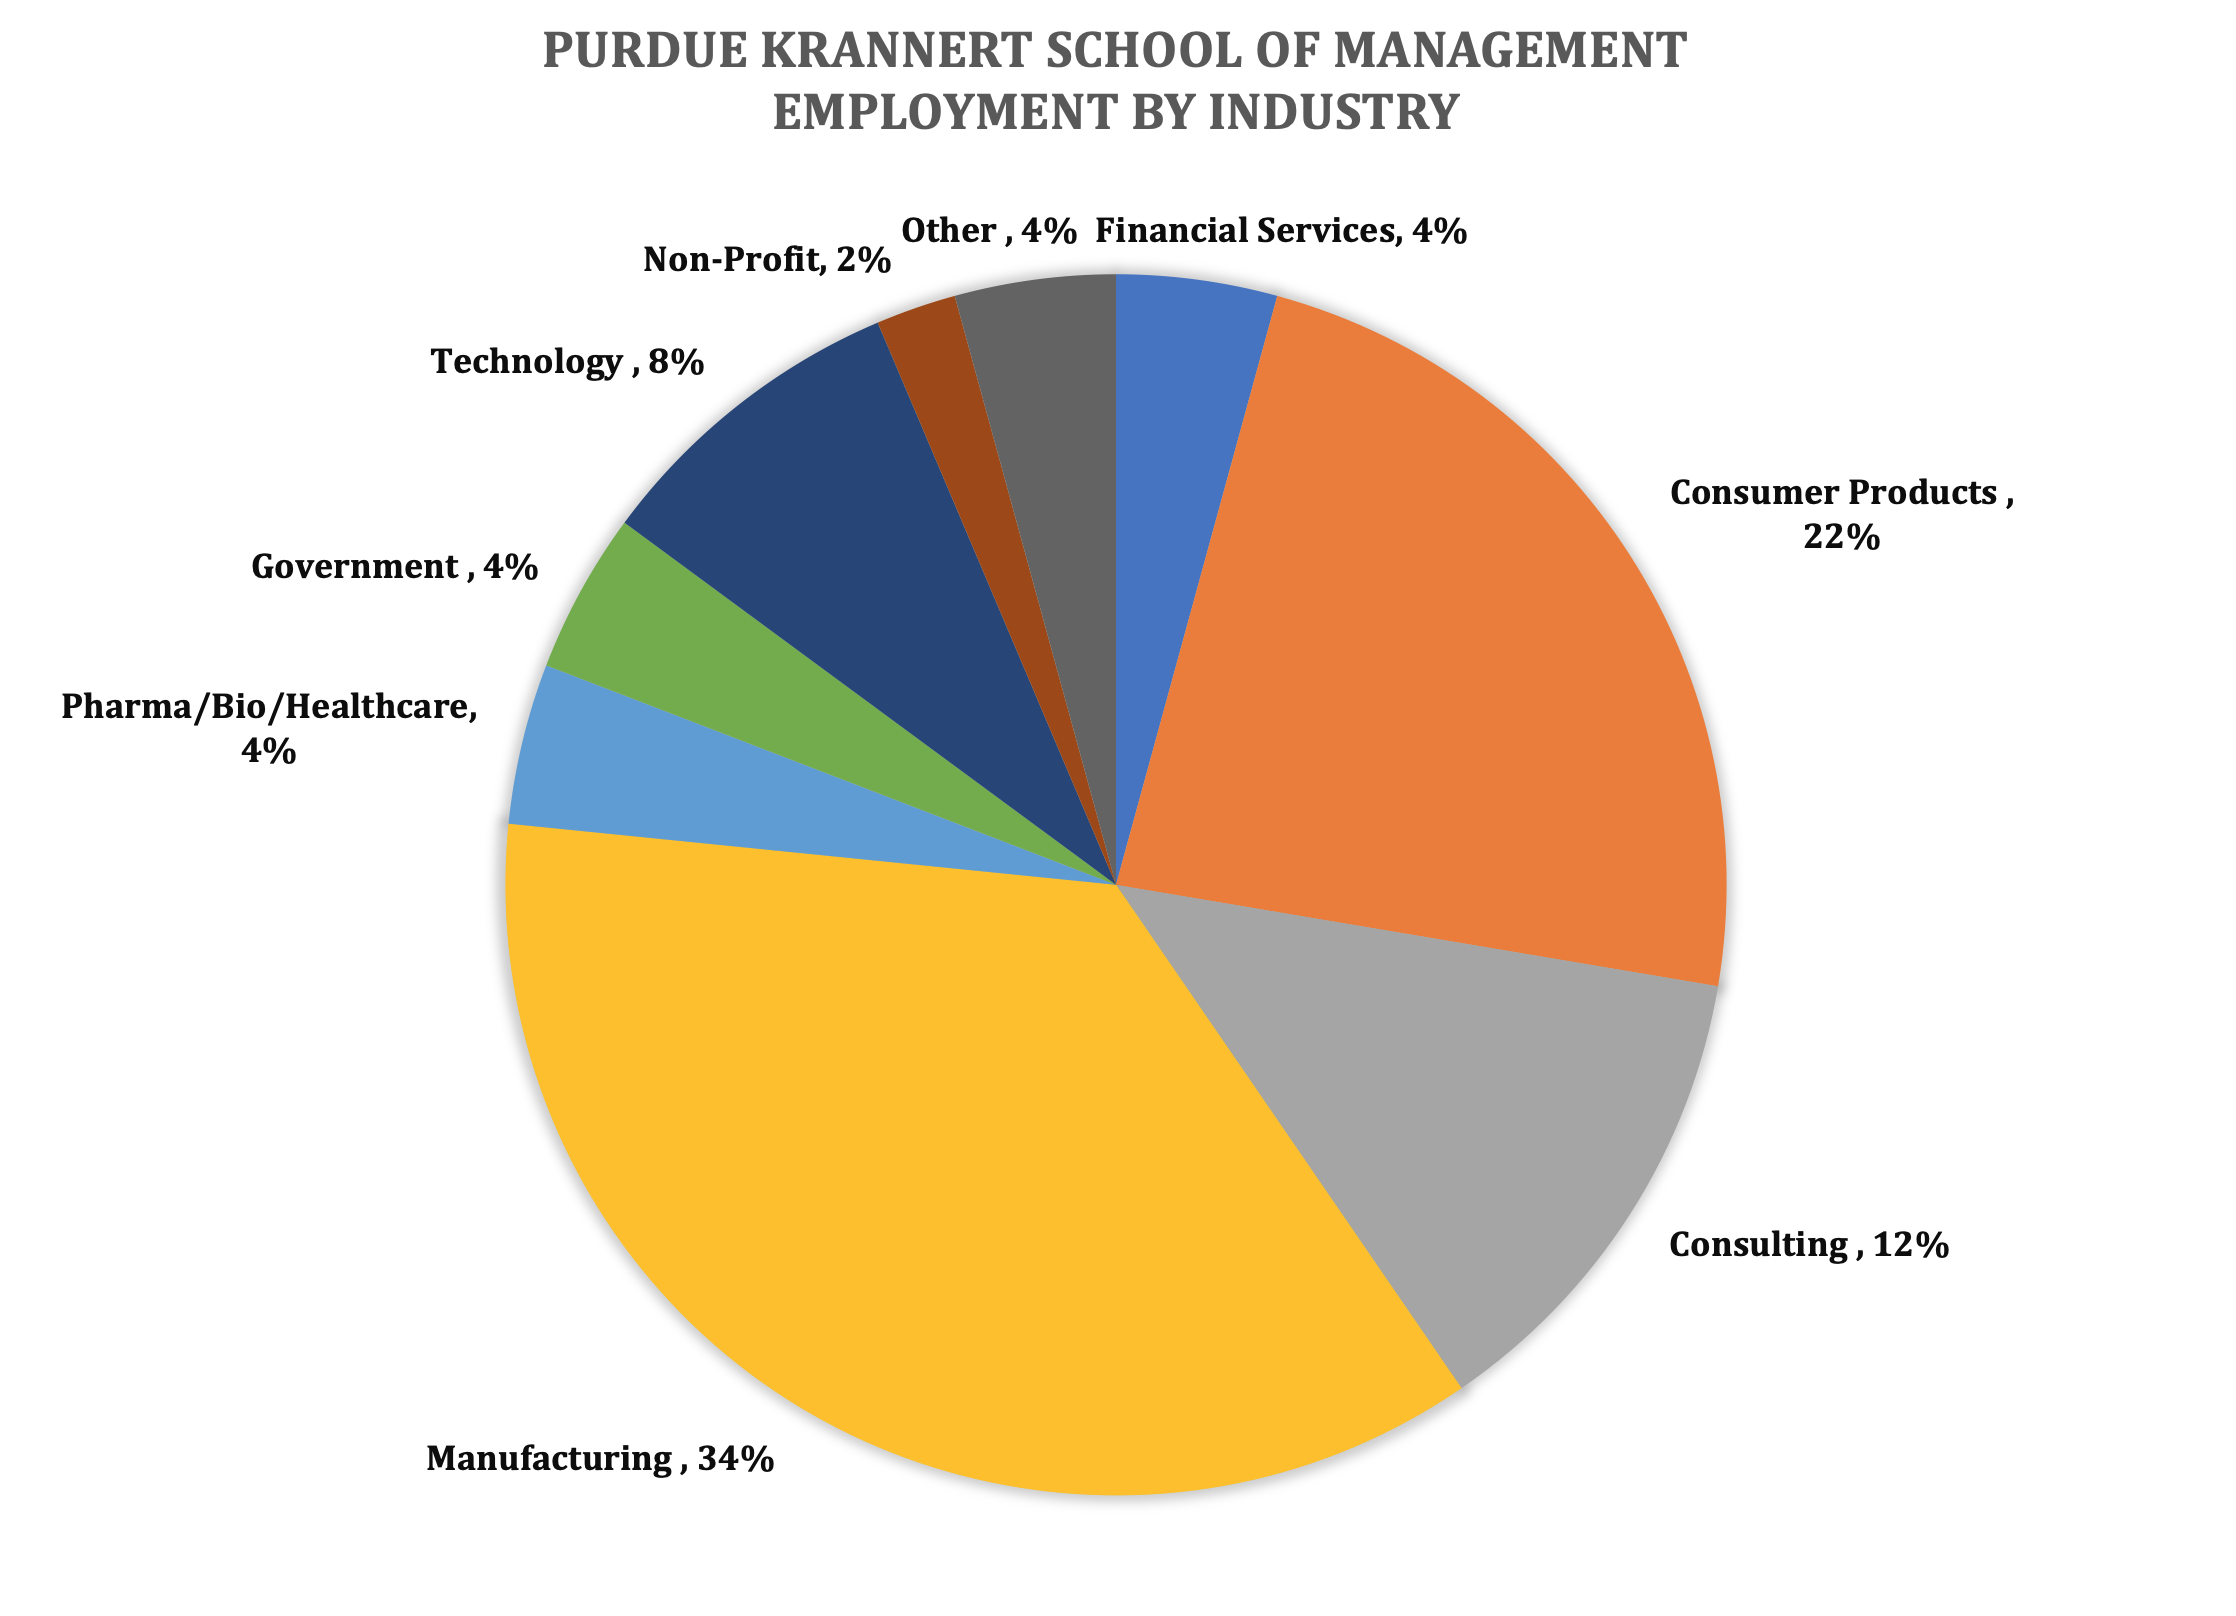 Purdue Krannert School of Management - Employment by Industry